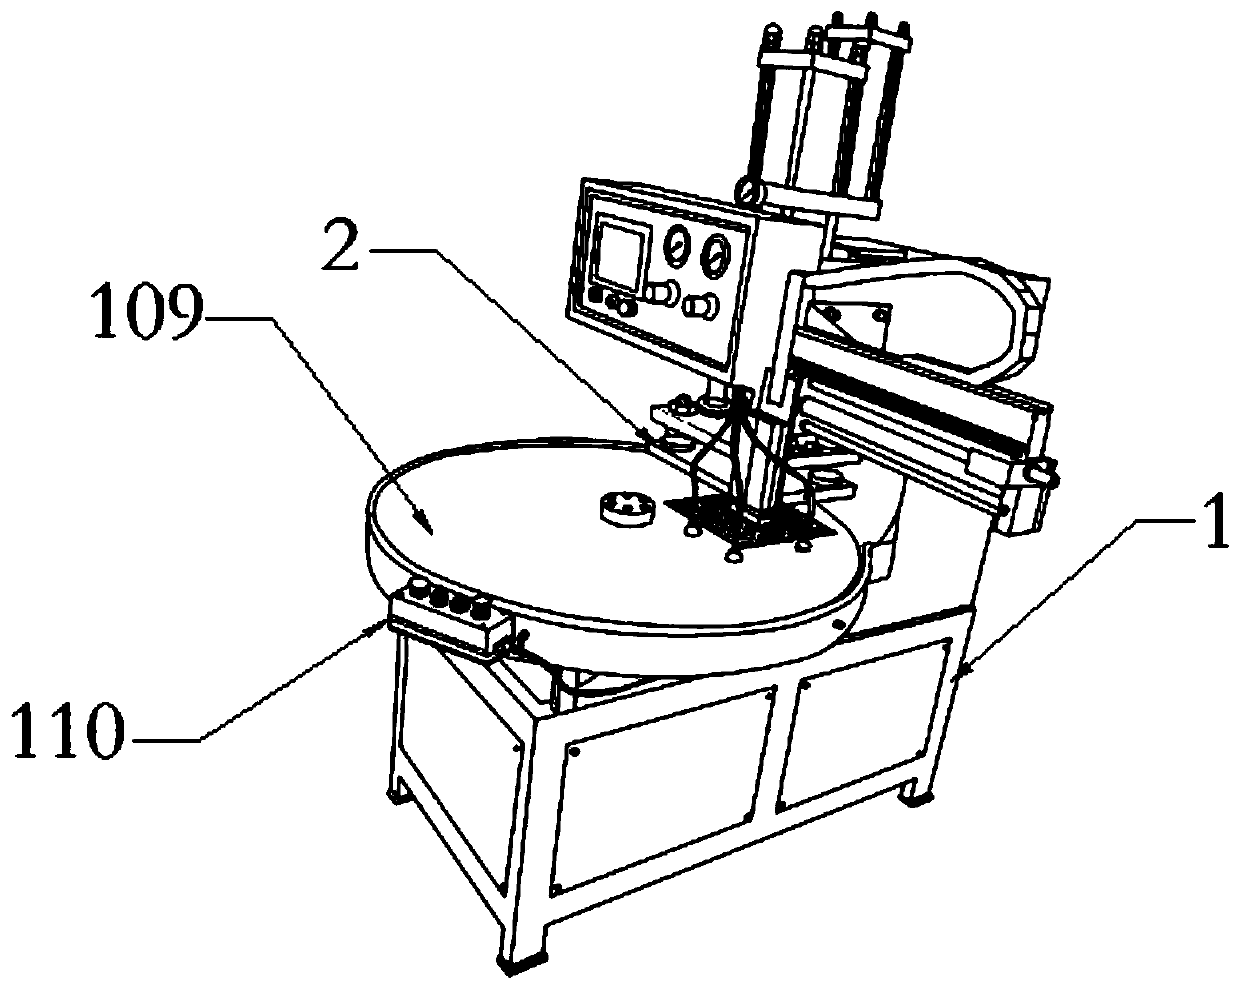 Working principle of automatic cutting machine